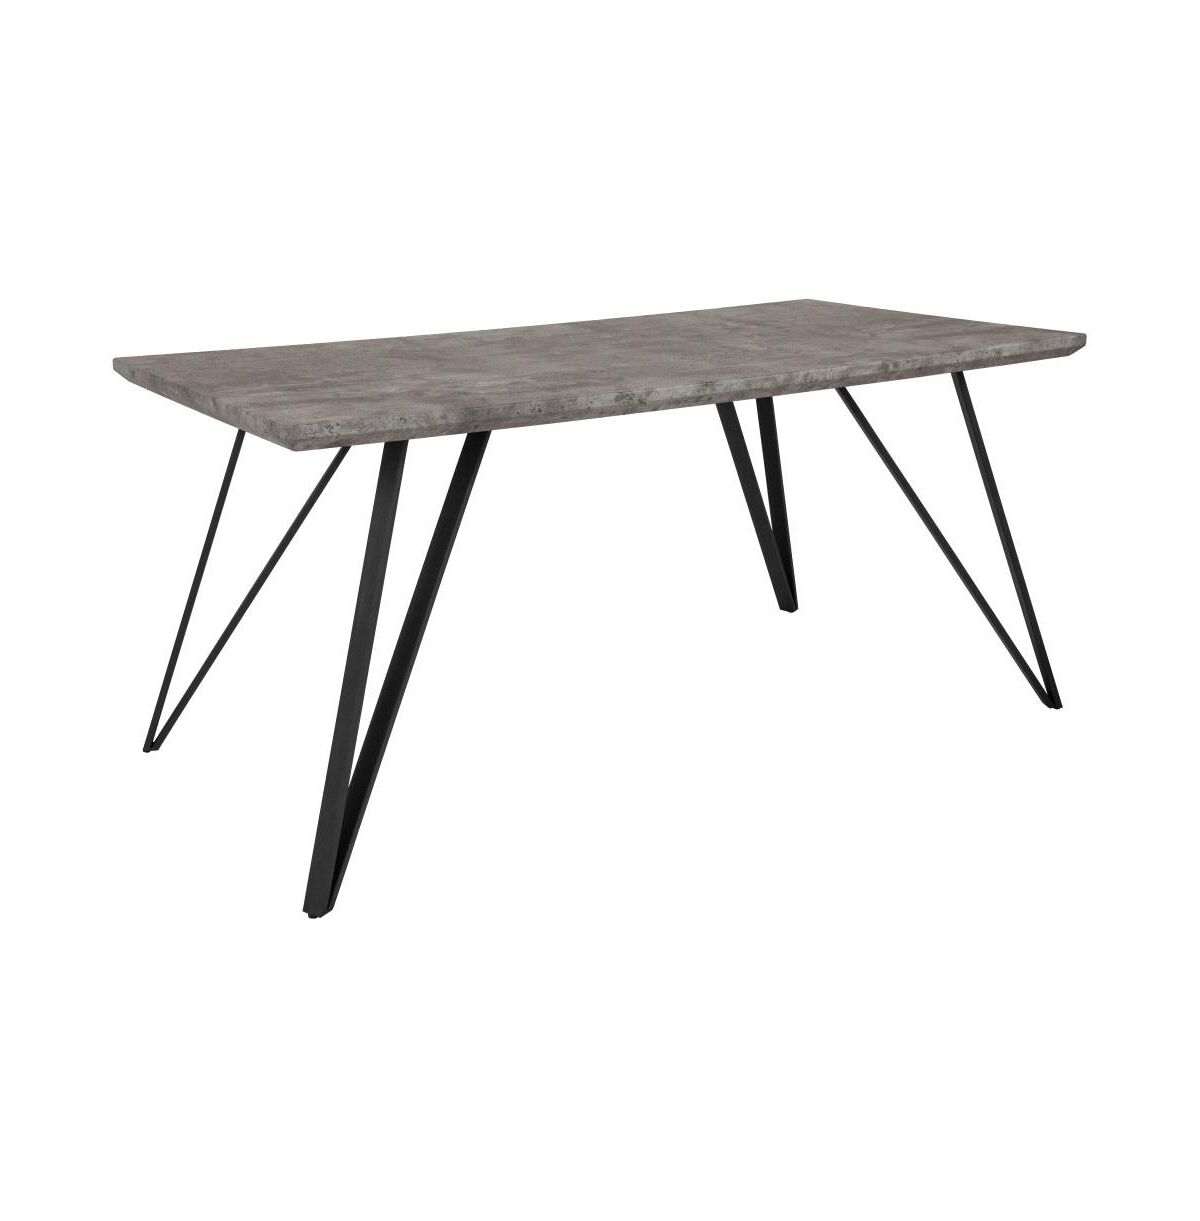 Merrick Lane Maya Rectangular Dining Table - Wood Finish Kitchen Table With Retro Hairpin Legs - Faux concrete